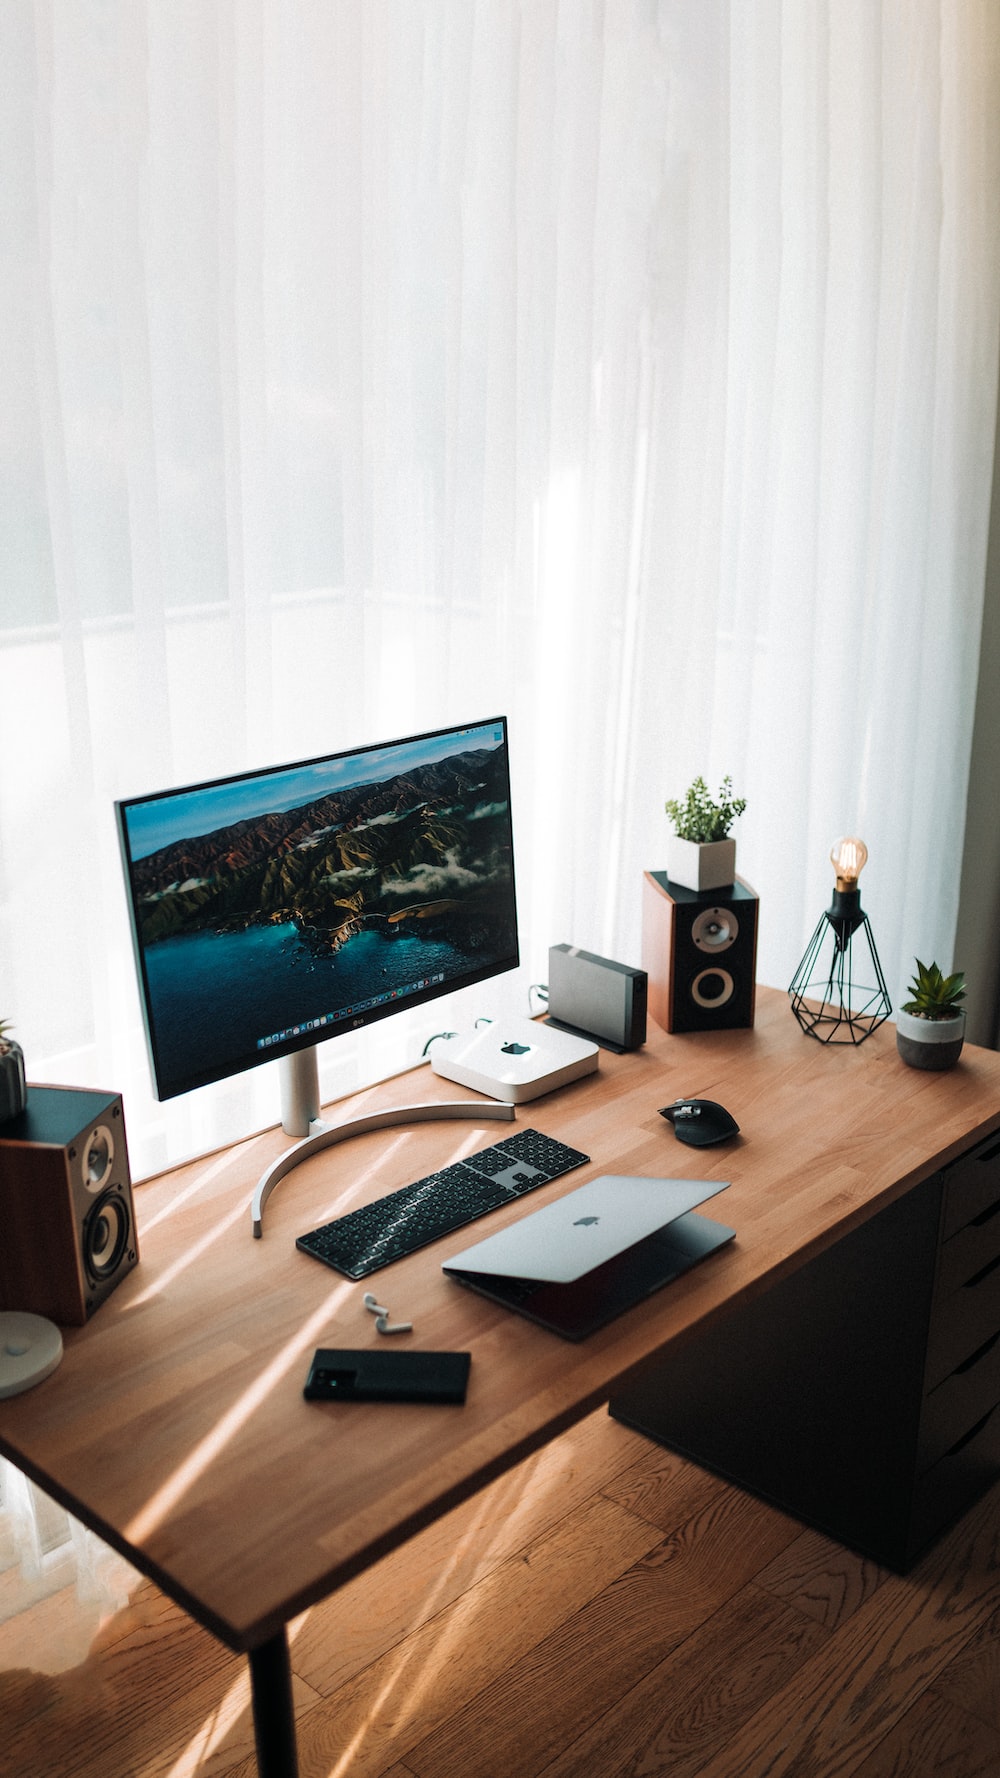 How should a desk be set up?